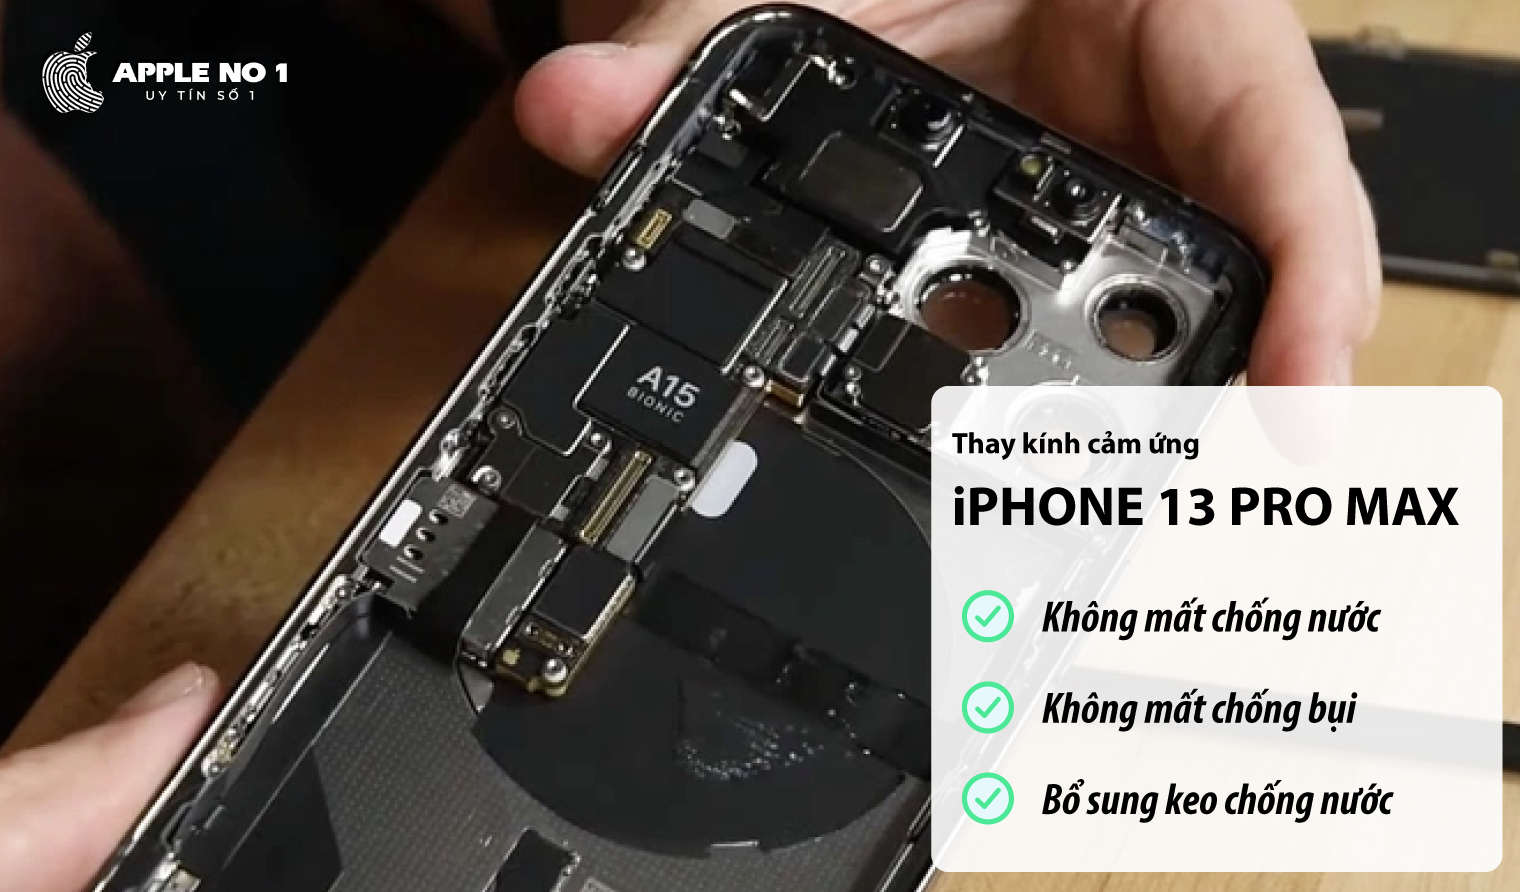 Thay kinh cam ung iPhone 13 Pro Max co bi mat chong nuoc khong?